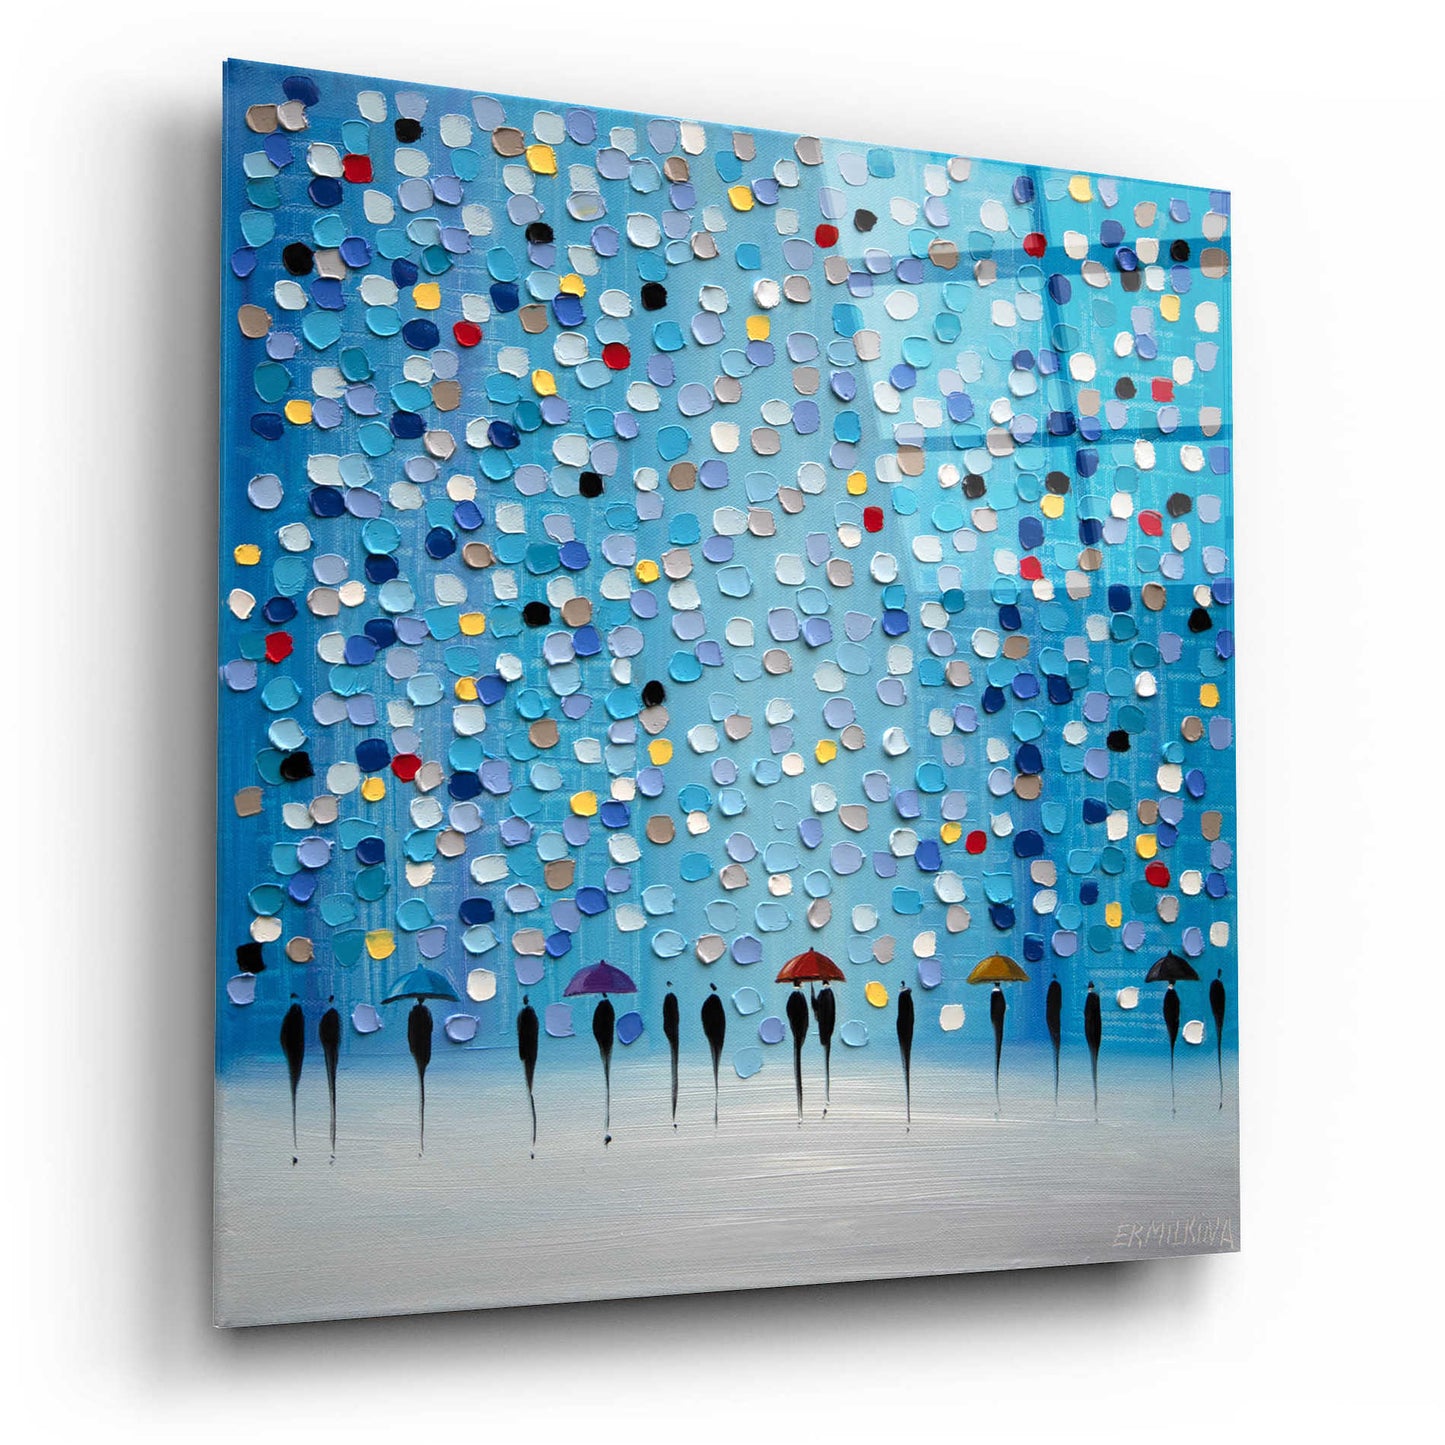 Epic Art 'Colorful City Umbrellas' by Ekaterina Ermilkina Acrylic Glass Wall Art,12x12